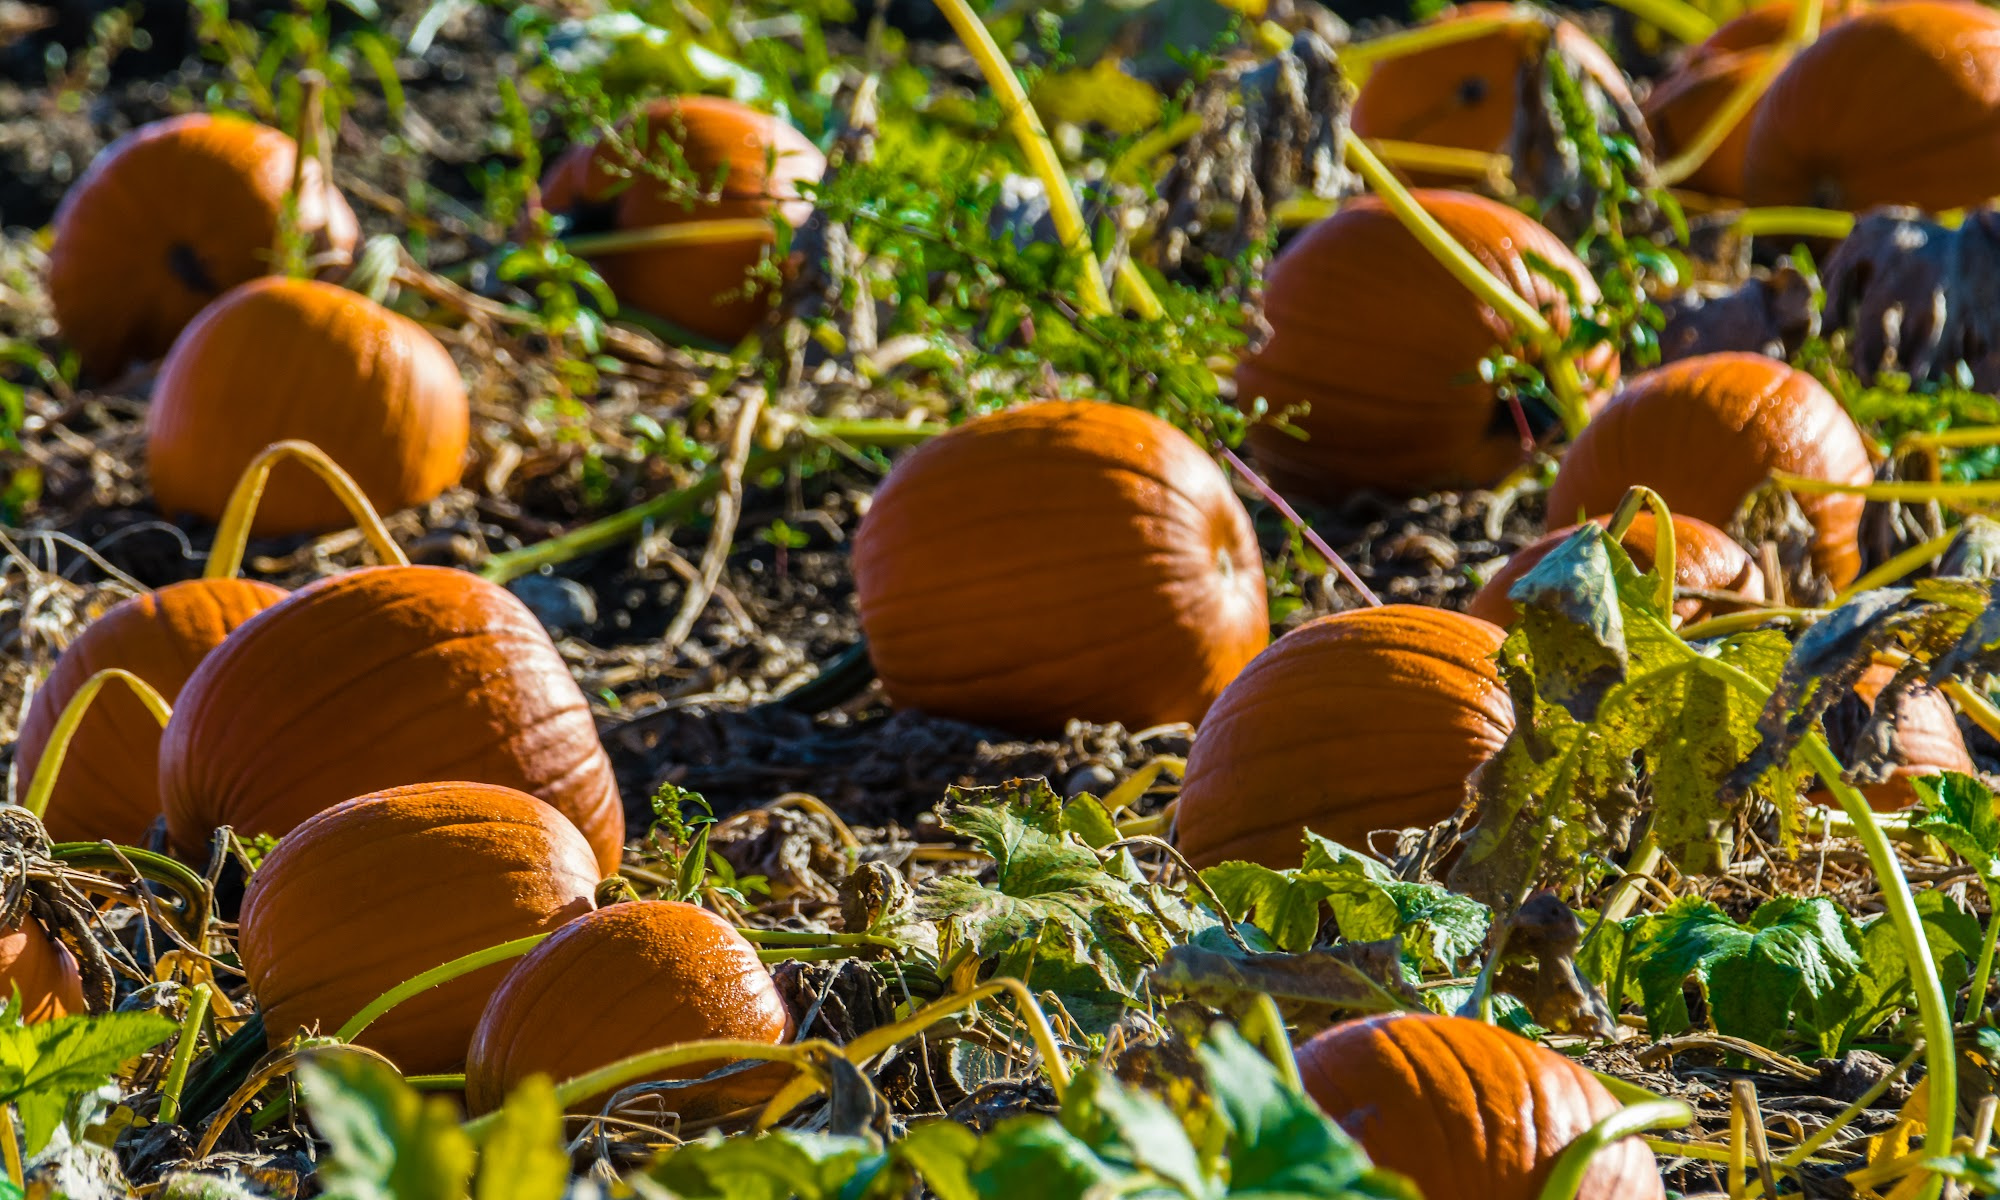 Harvesting and Storing Pumpkins